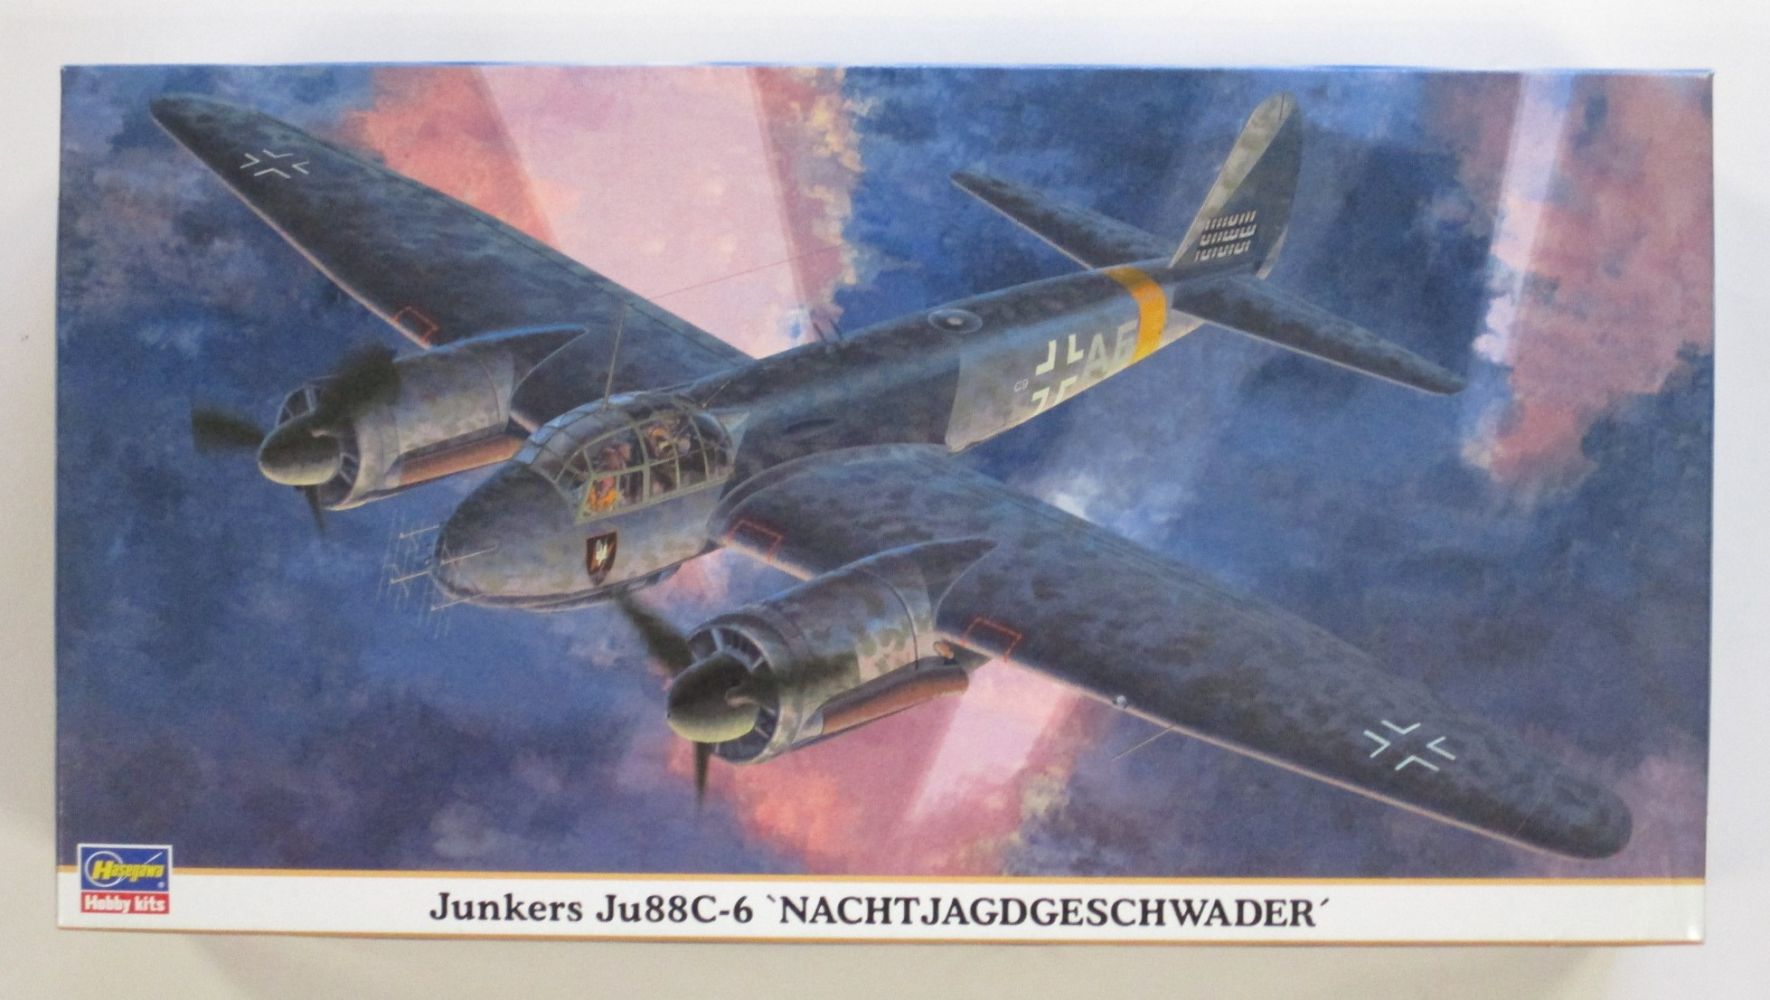 6 88 c. Junkers ju-88c-6. Юнкерс 88c. Junkers ju 88 g6. Ju 88 c-6.